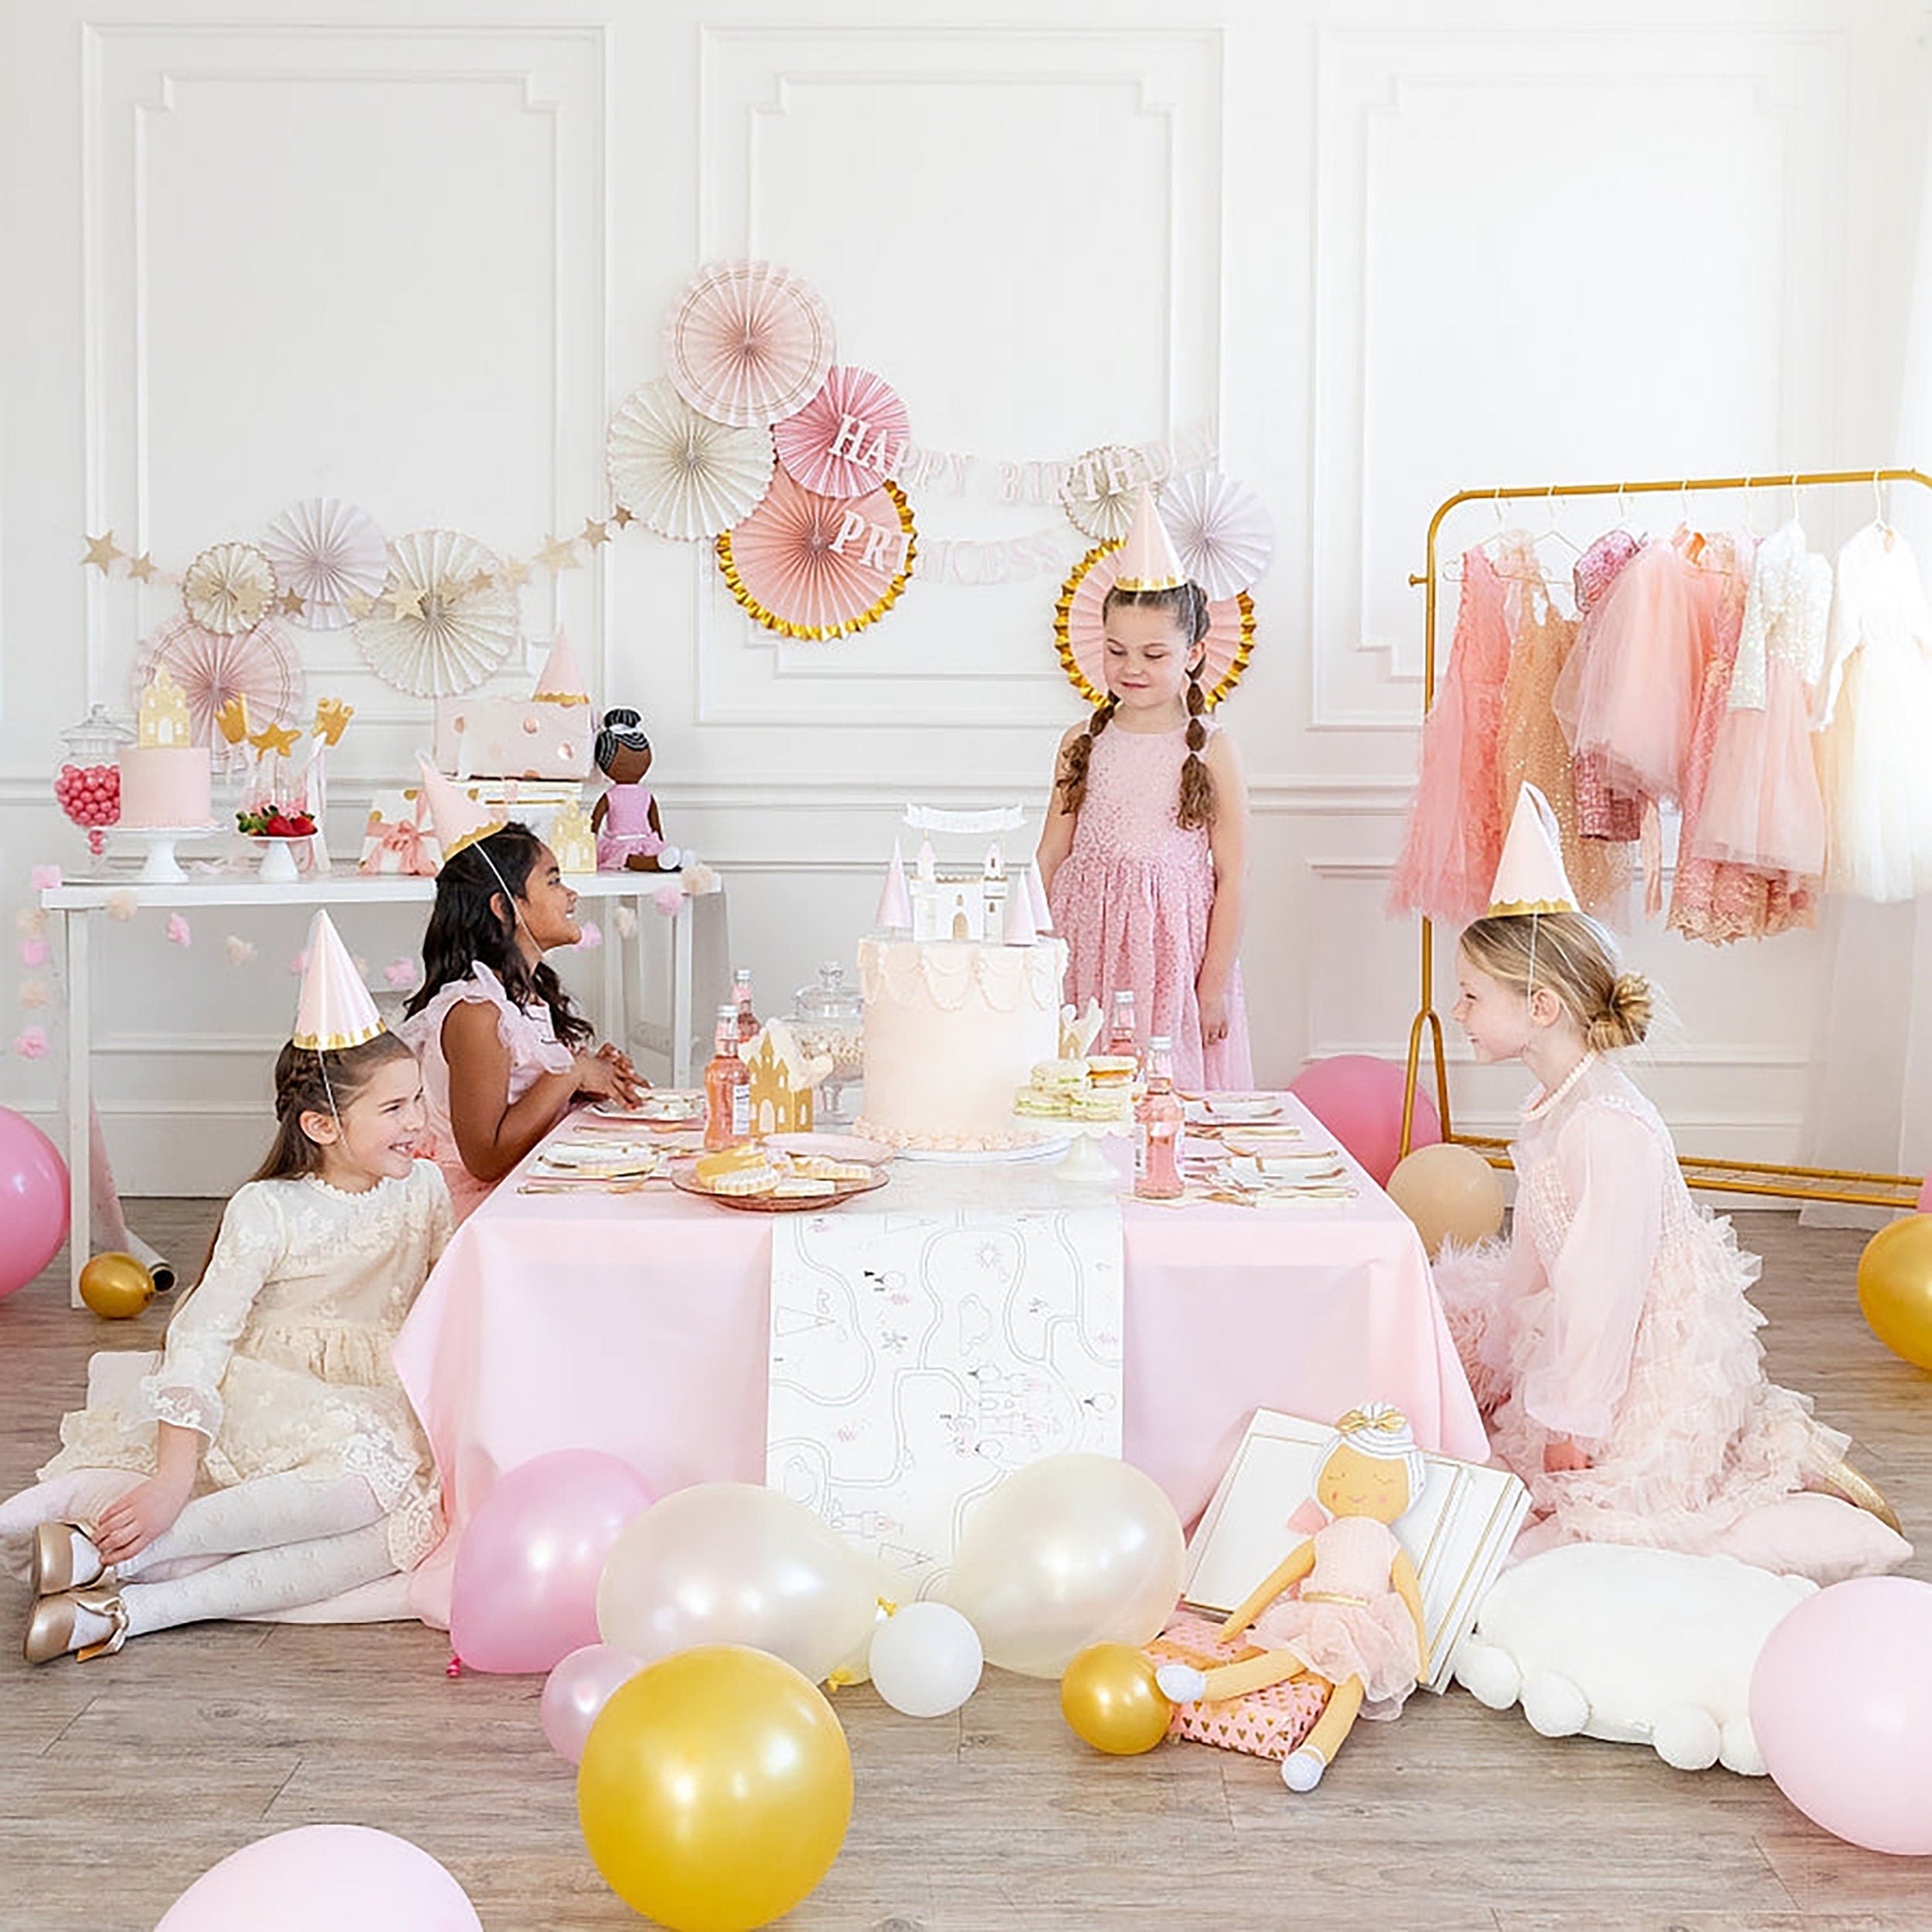 Princess Banner | Princess Party Decorations - Princess Birthday Party Decorations - Princess Tea Party - Princess Baby Shower Decorations